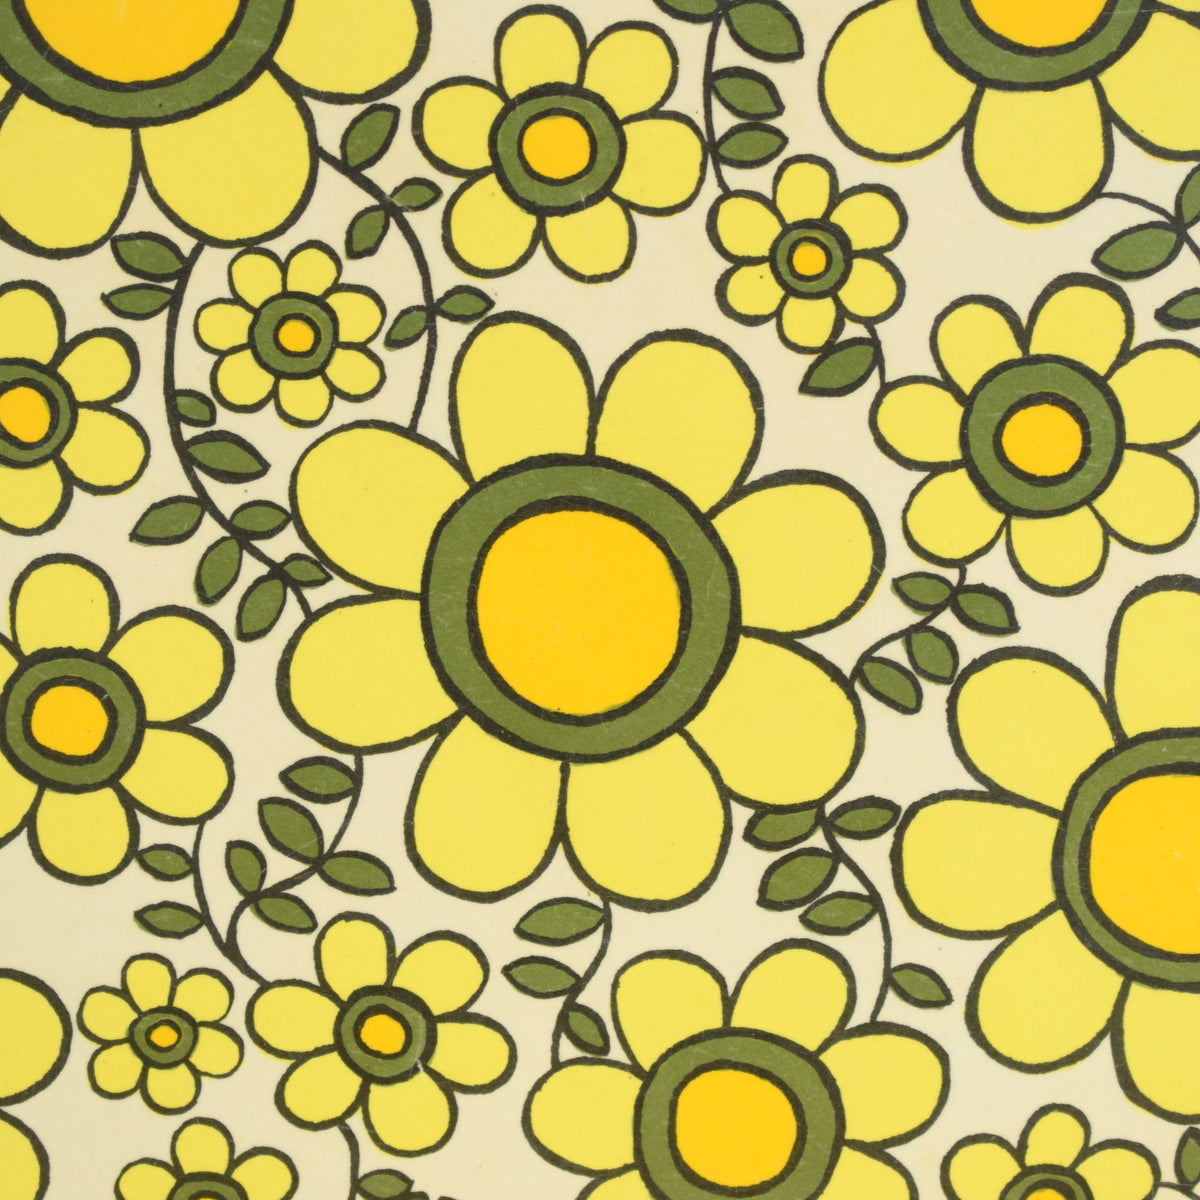 Vintage 1960s Flower Power Taunton Vale Tray - Yellow